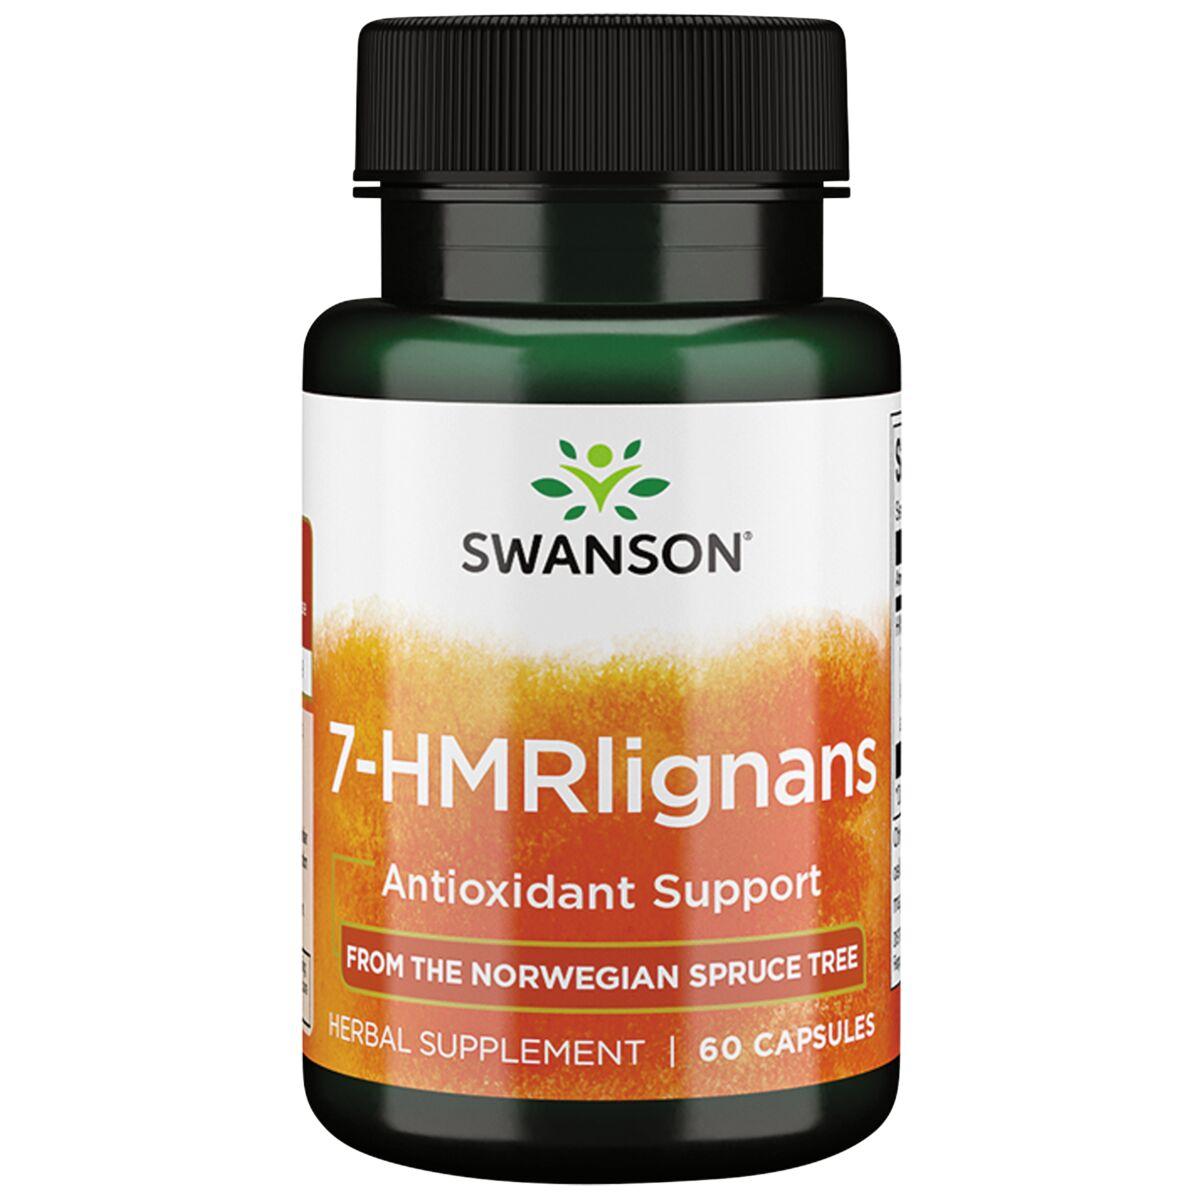 Swanson Ultra 7-Hmrlignans from Norwegian Spruce Tree Vitamin | 40 mg | 60 Caps